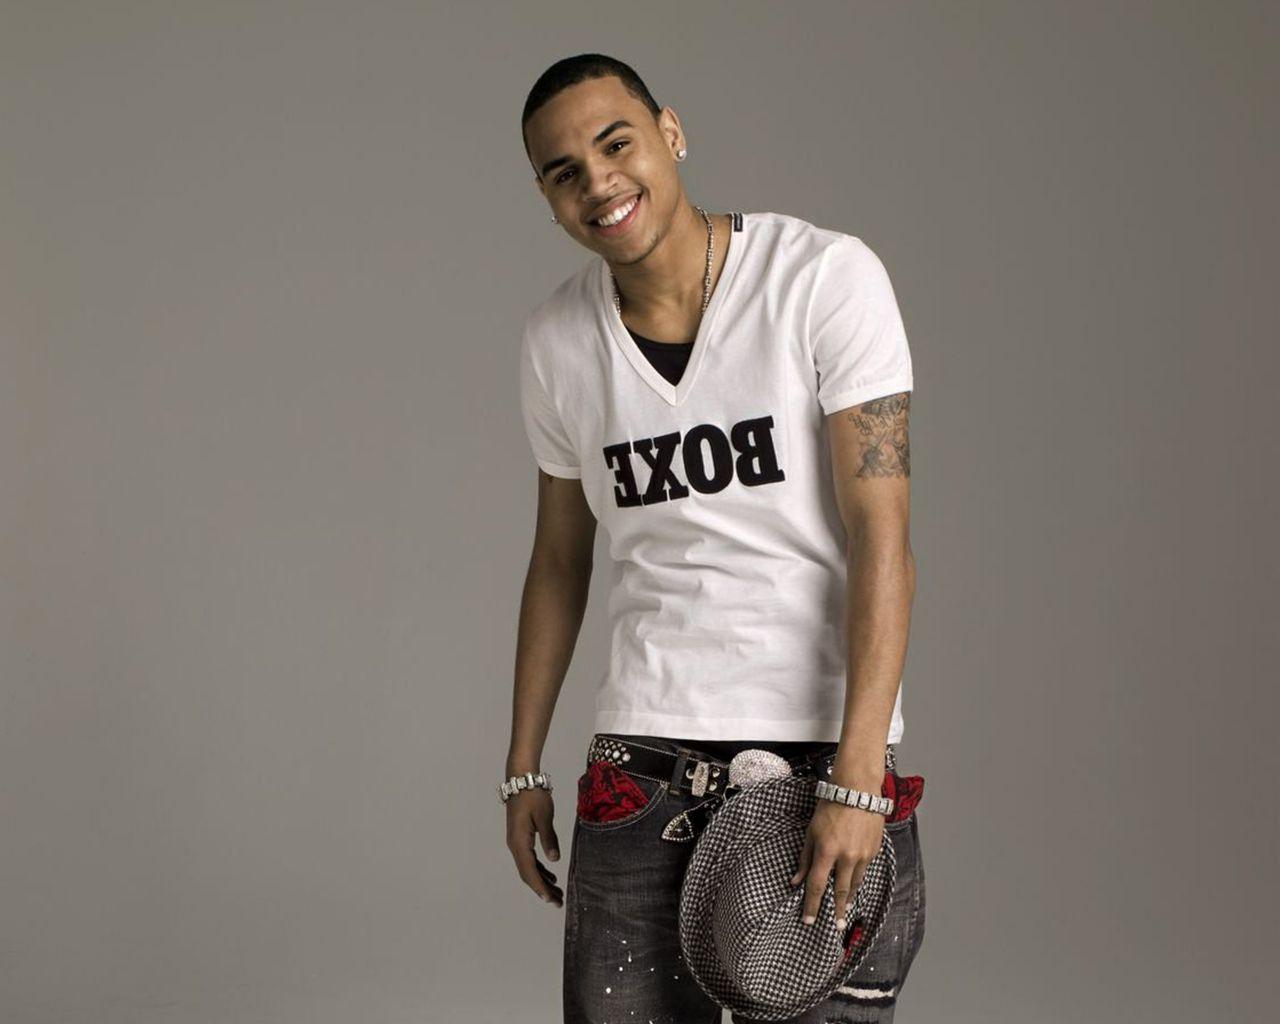 Chris Brown Wallpaper, Rap Singer, Dancer, HD Image, X, Music